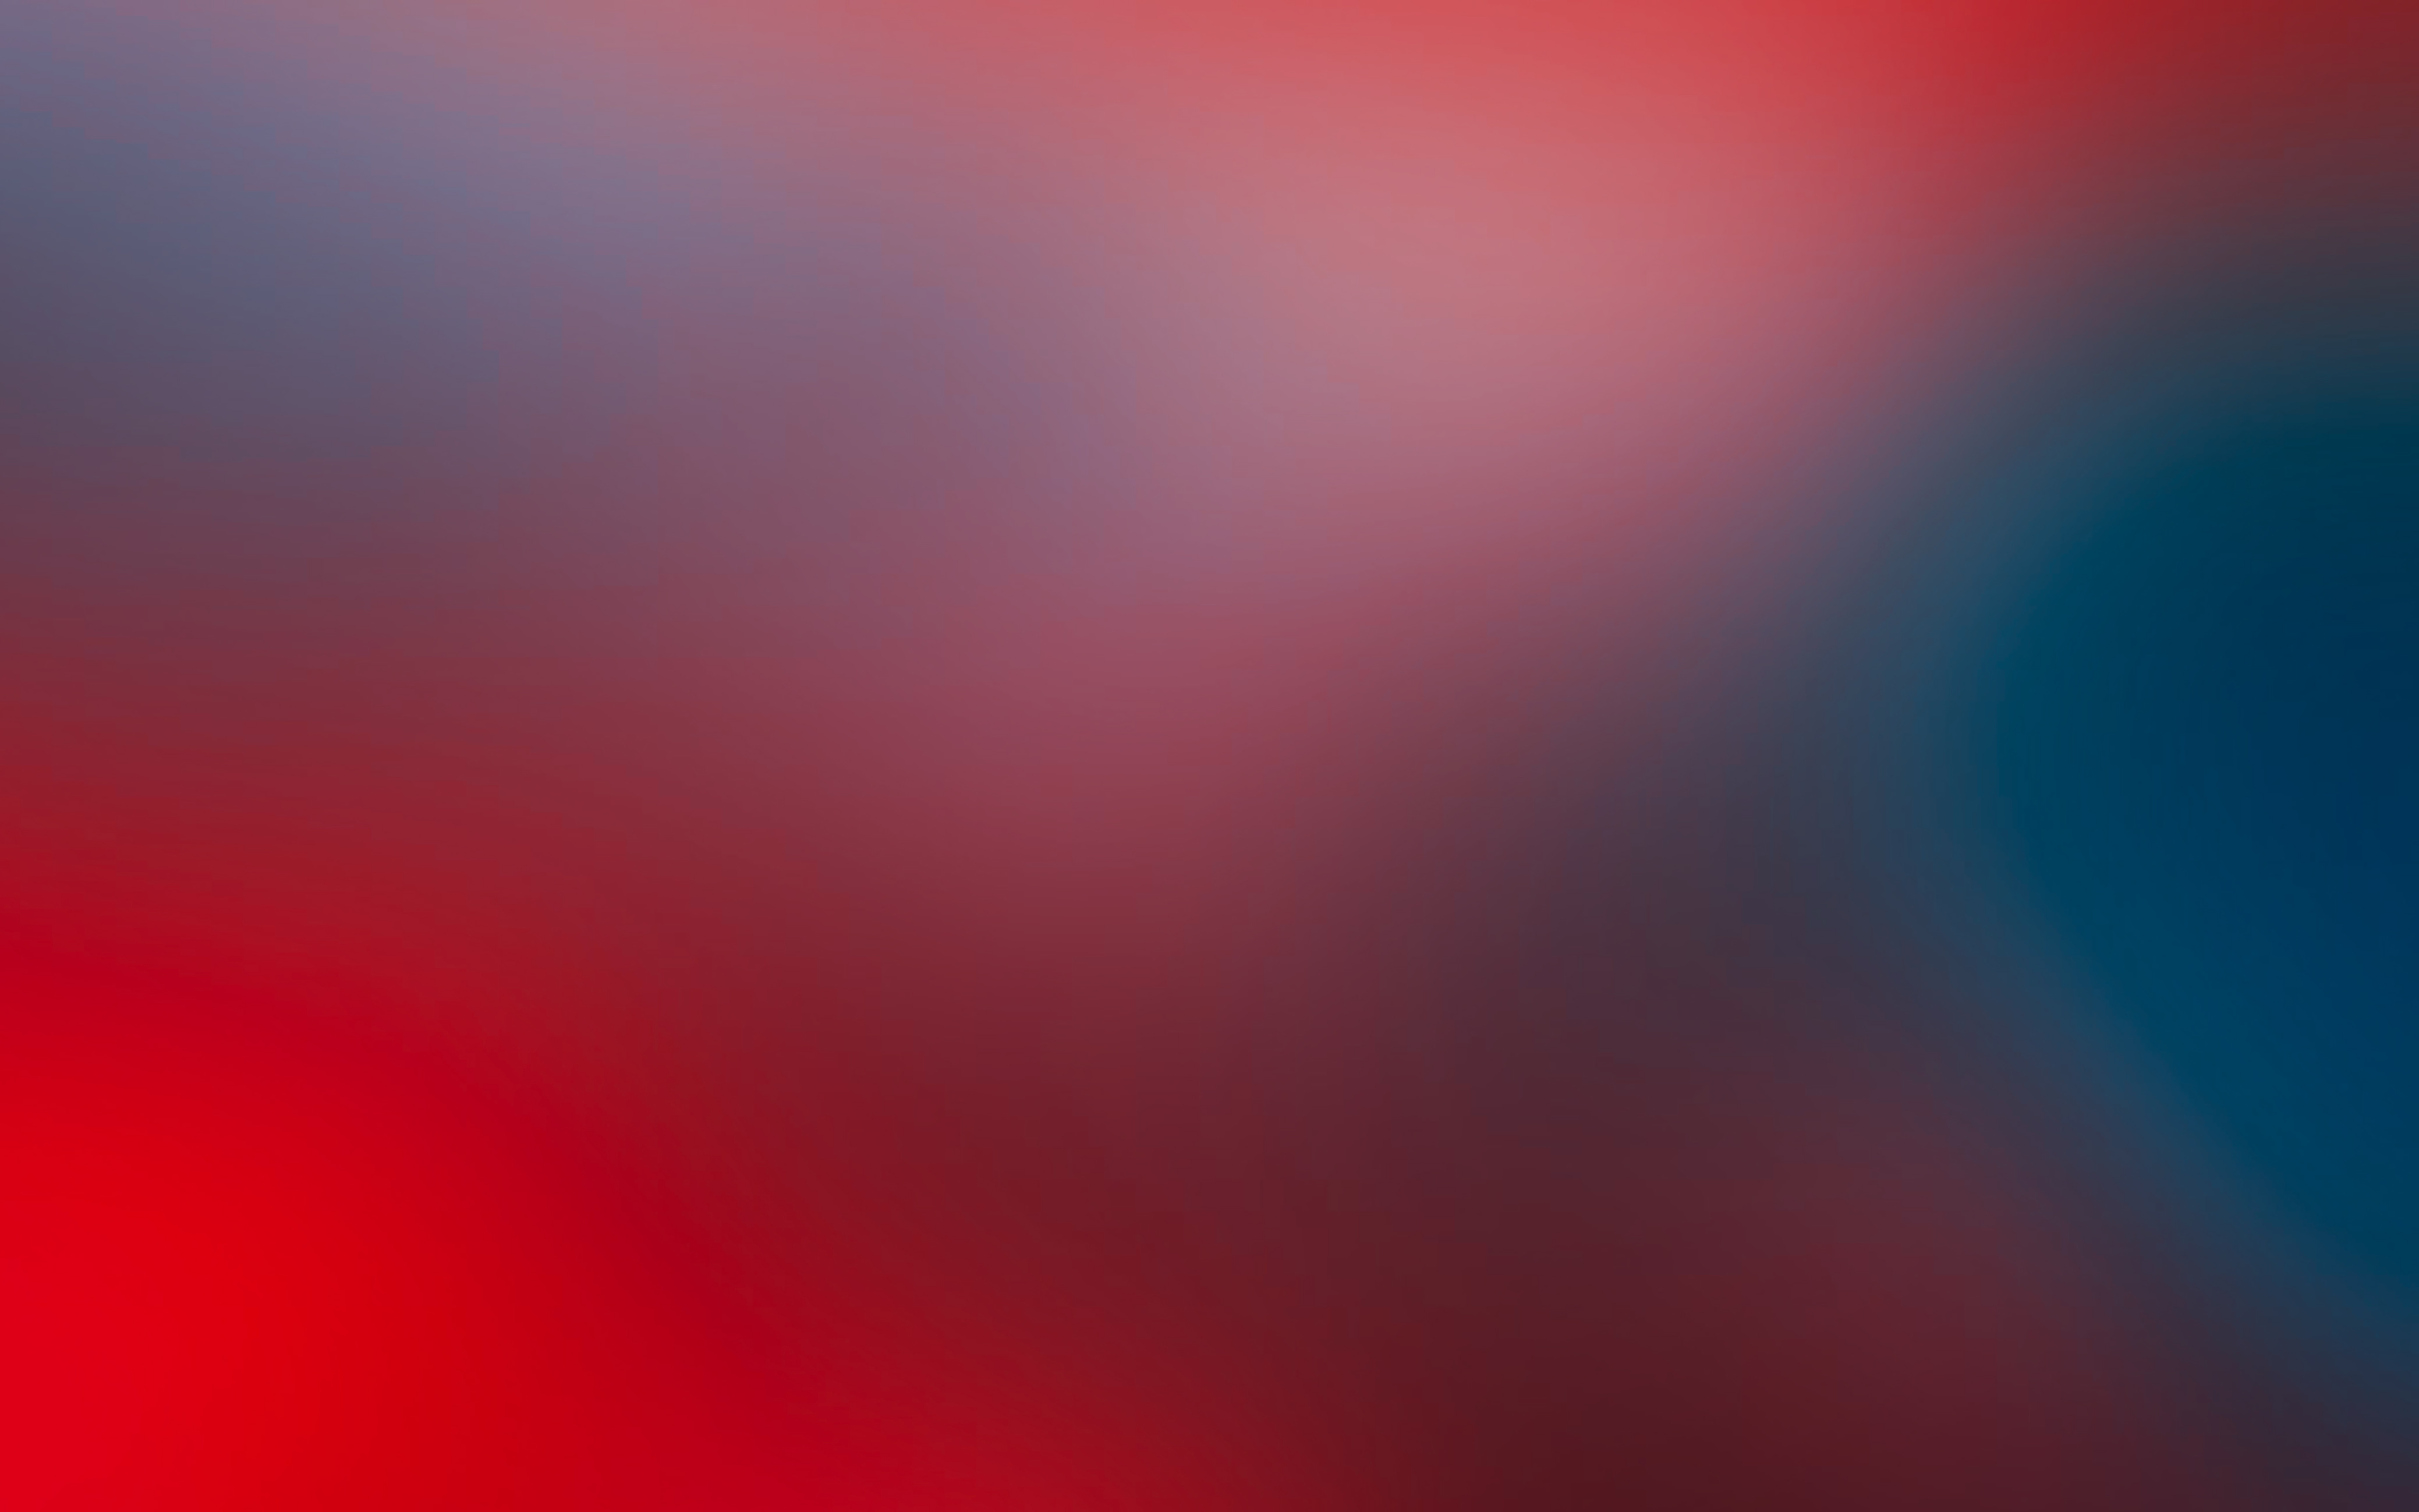 Blur 4k Ultra HD Wallpaper by JFL